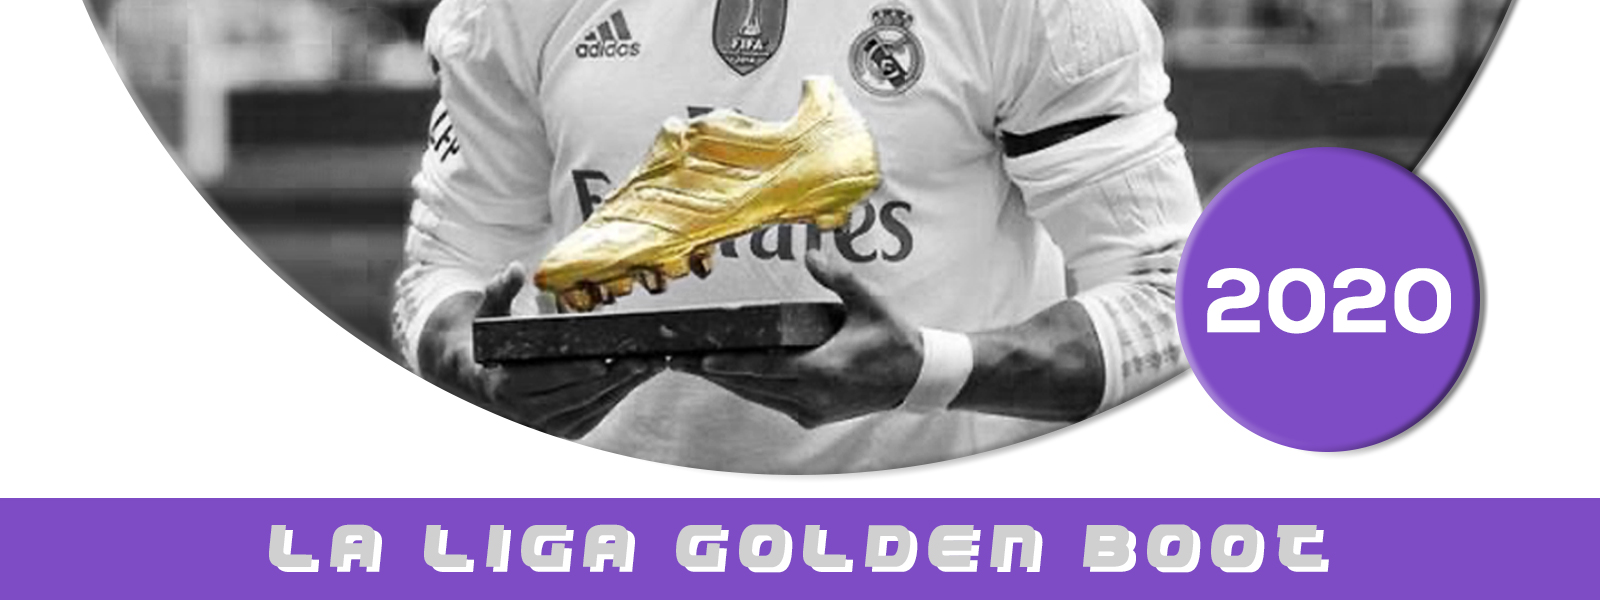 La Liga Golden Boot